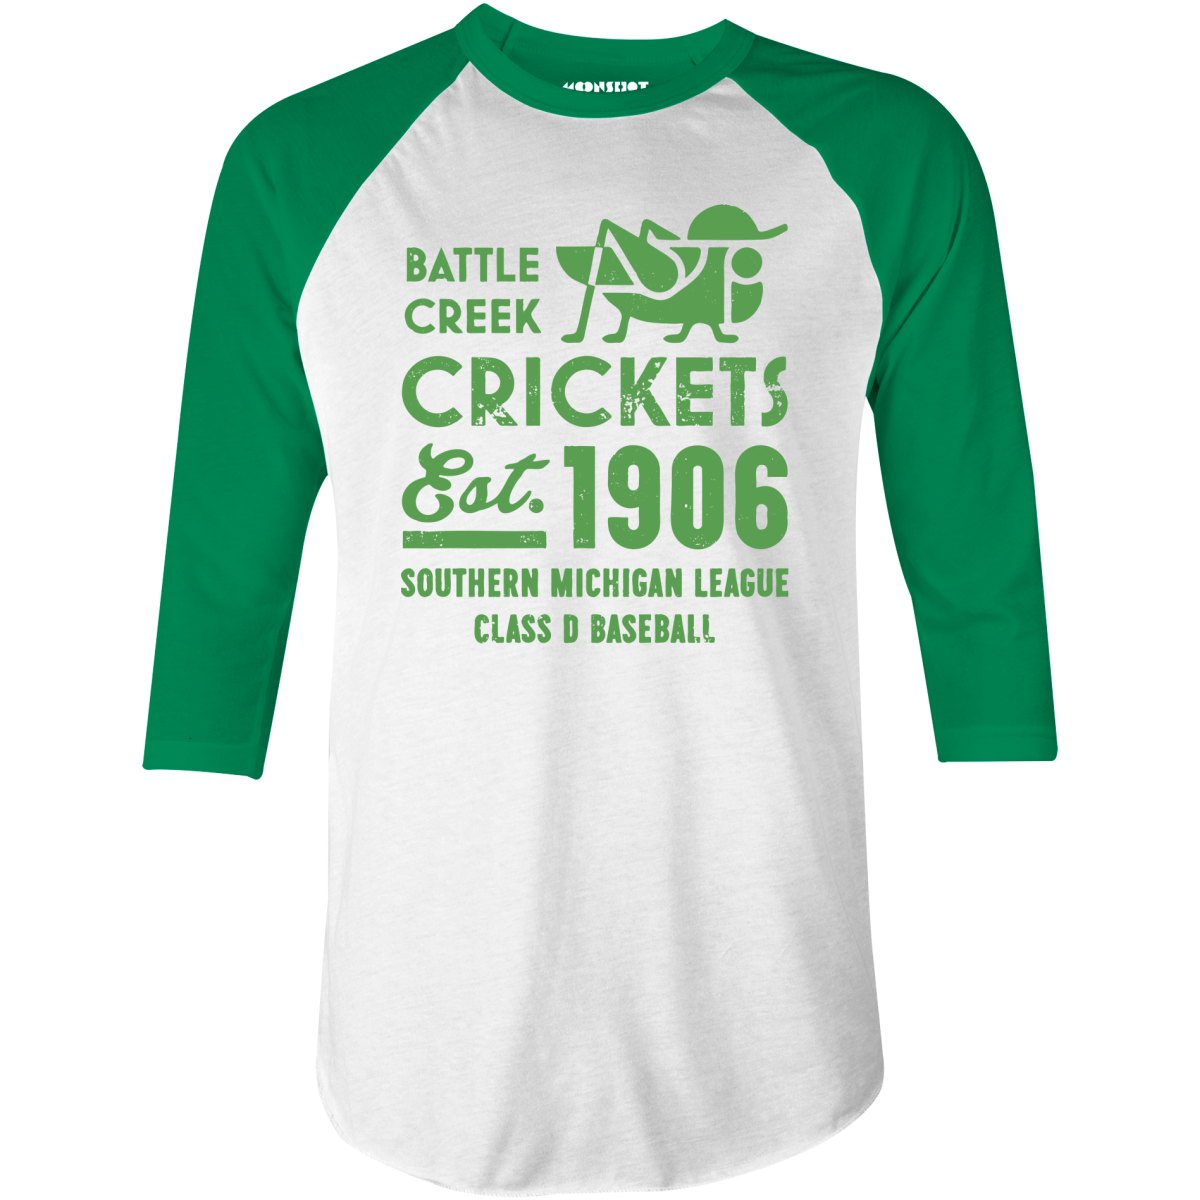 Battle Creek Crickets - Michigan - Vintage Defunct Baseball Teams - 3/4 Sleeve Raglan T-Shirt